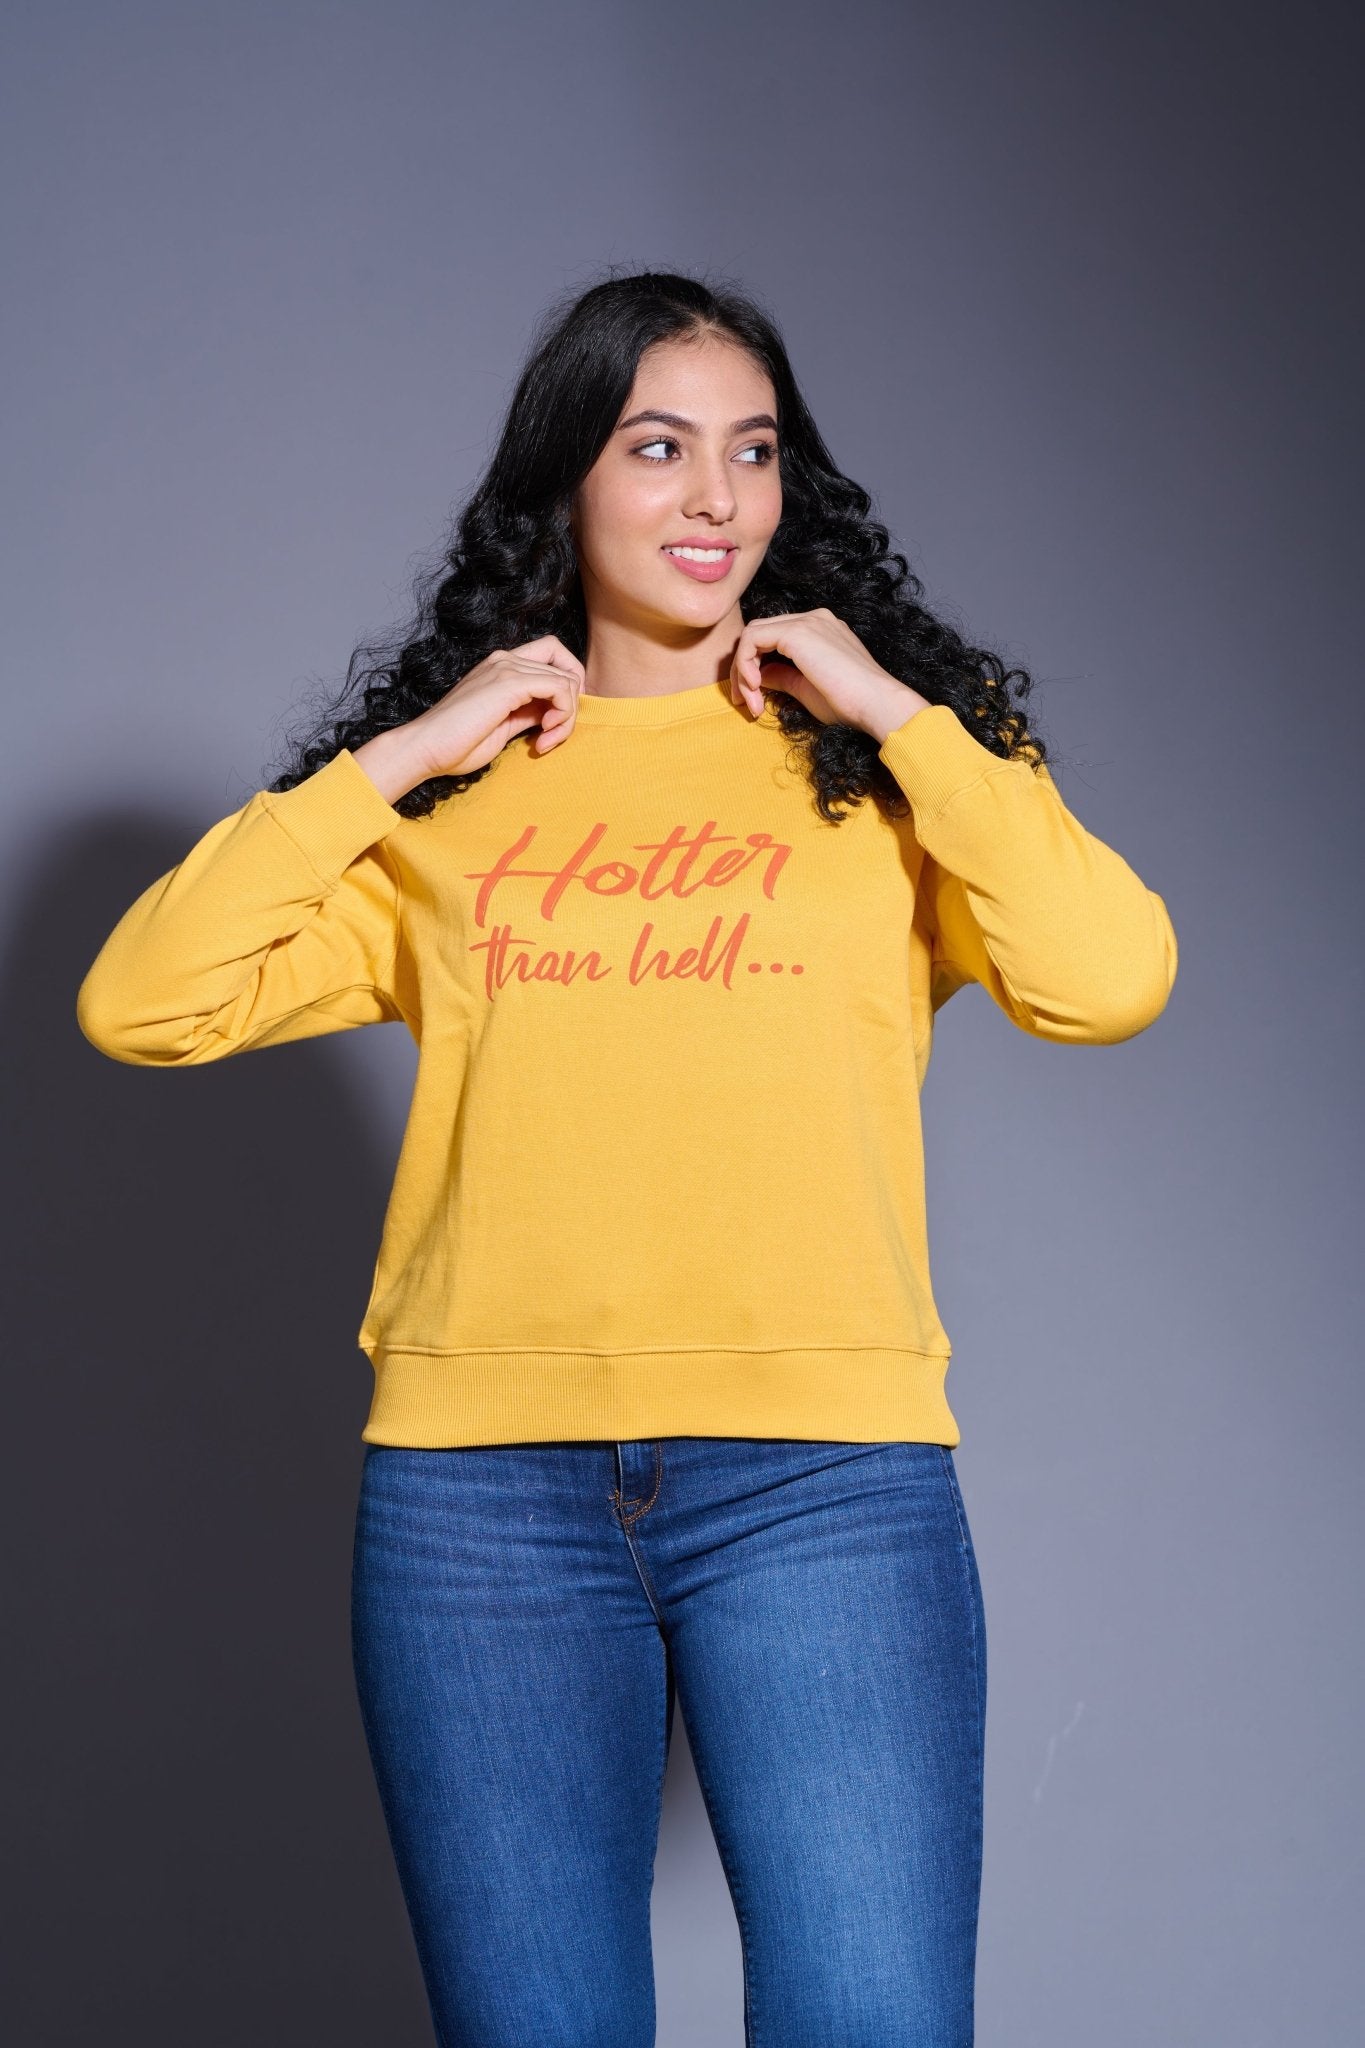 Hotter Then Hell Printed Yellowish Sweatshirt for Women - Go Devil